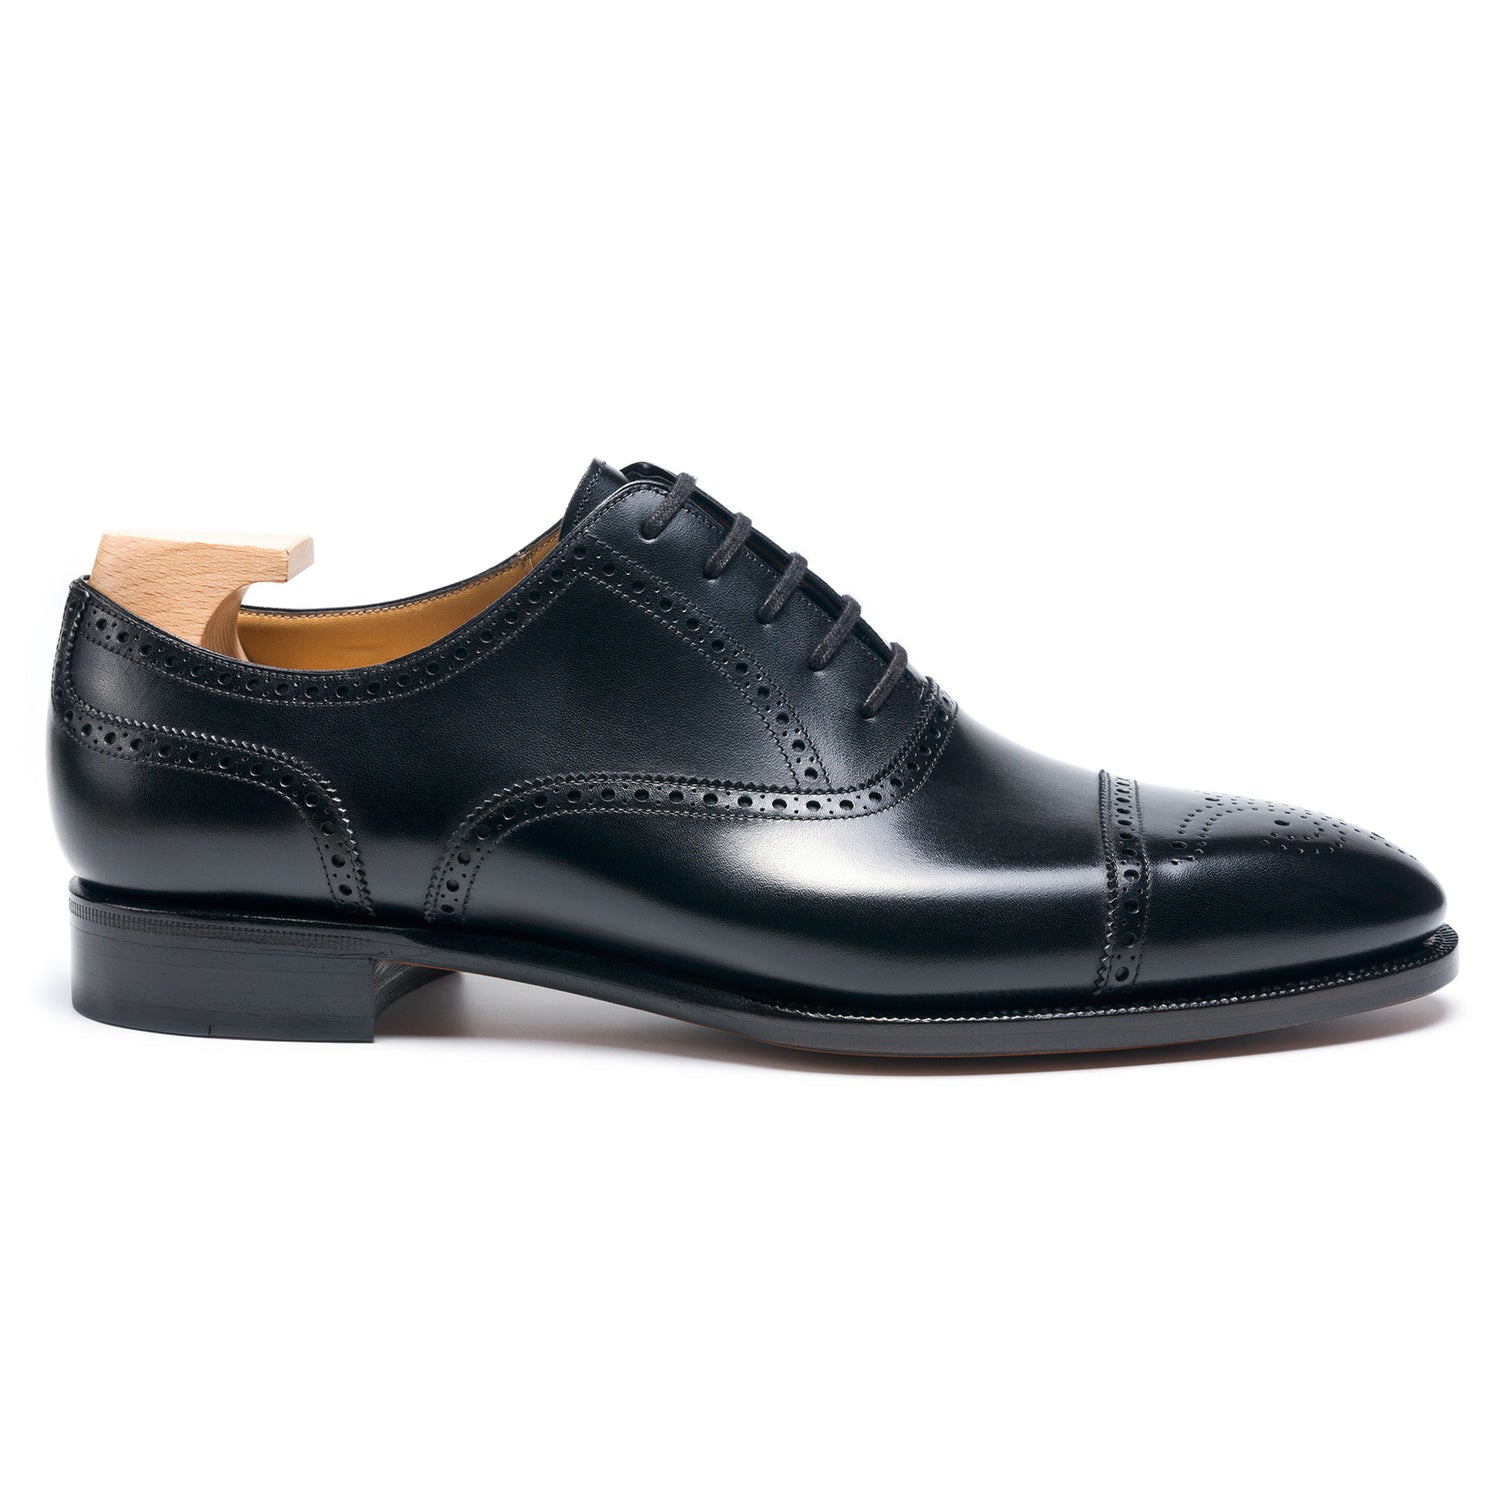 TLB Mallorca leather shoes 210 / GOYA / BOXCALF BLACK